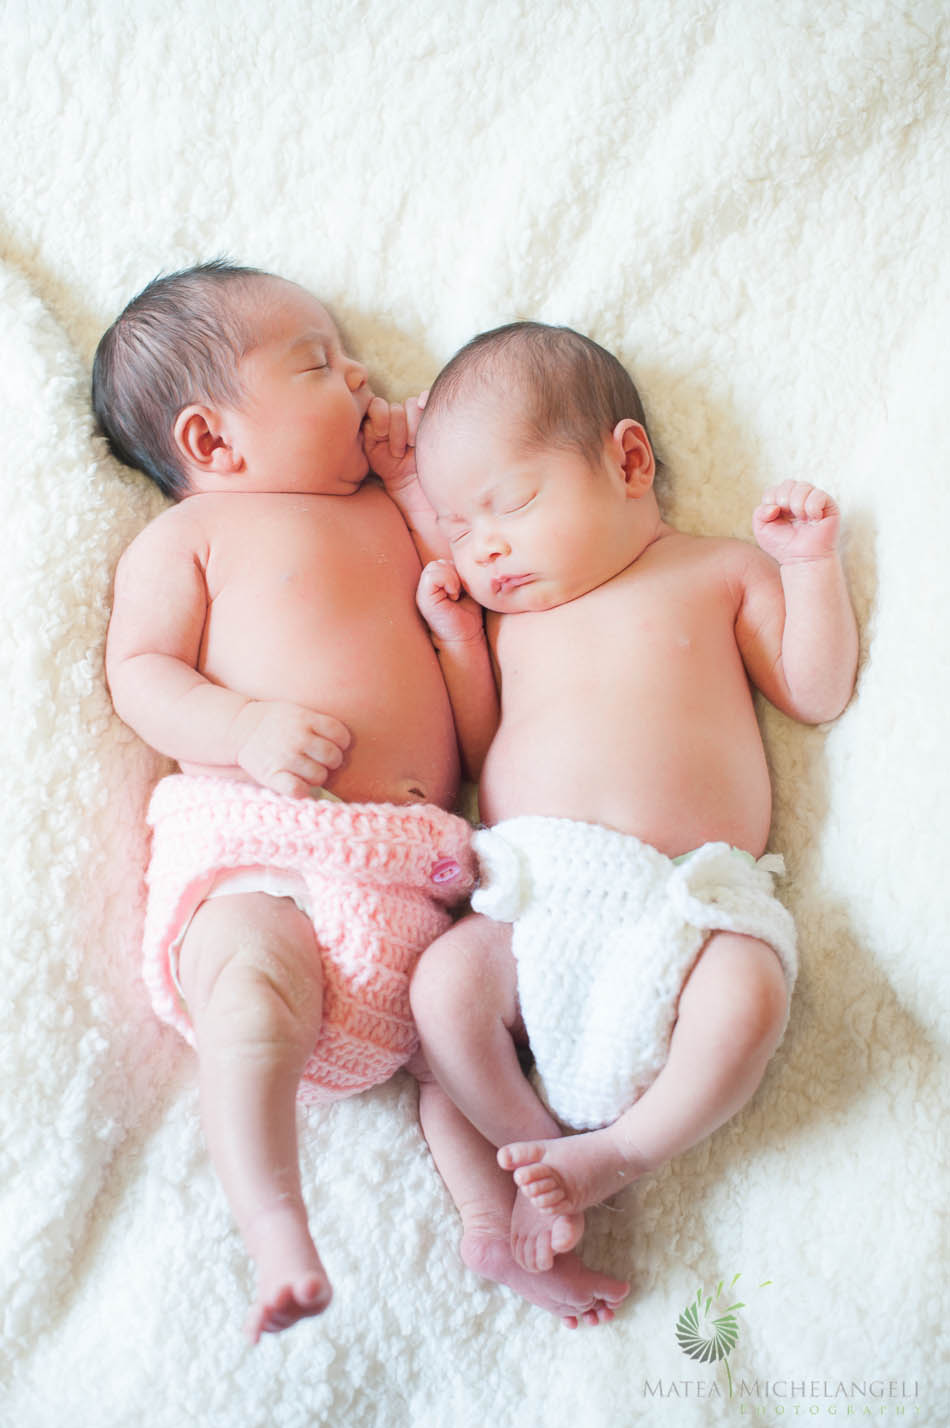 Victoria and Valentina ~ Kalamazoo Newborn Photographer  Matea Michelangeli Photography